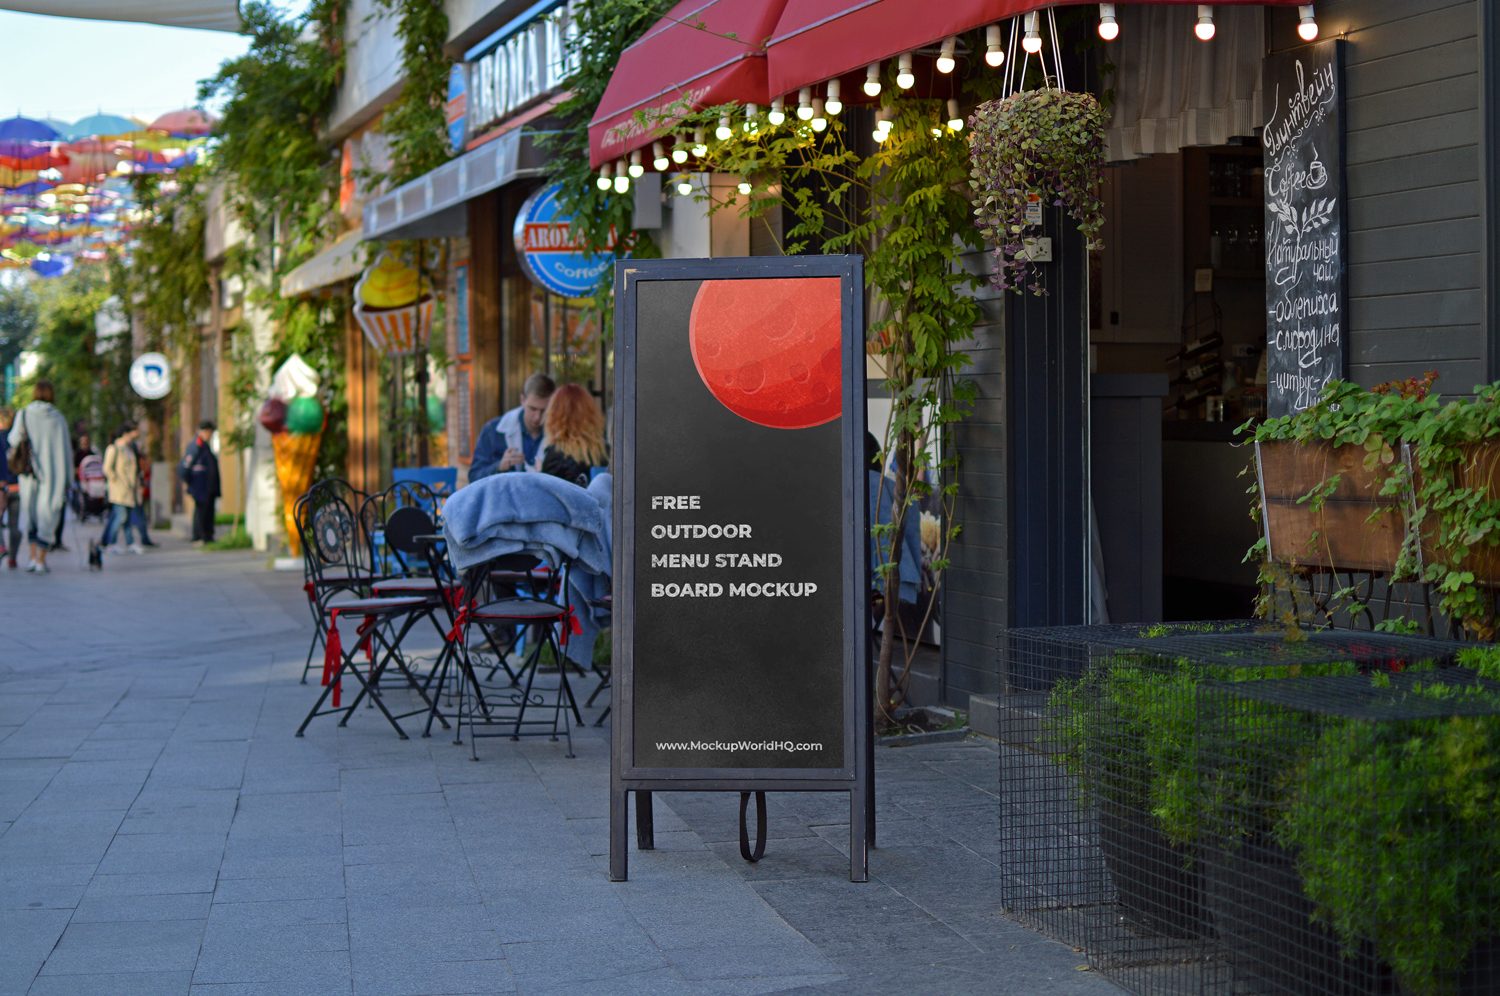 Download Free Outdoor Restaurant Menu Stand Board Mockup | Mockup World HQ